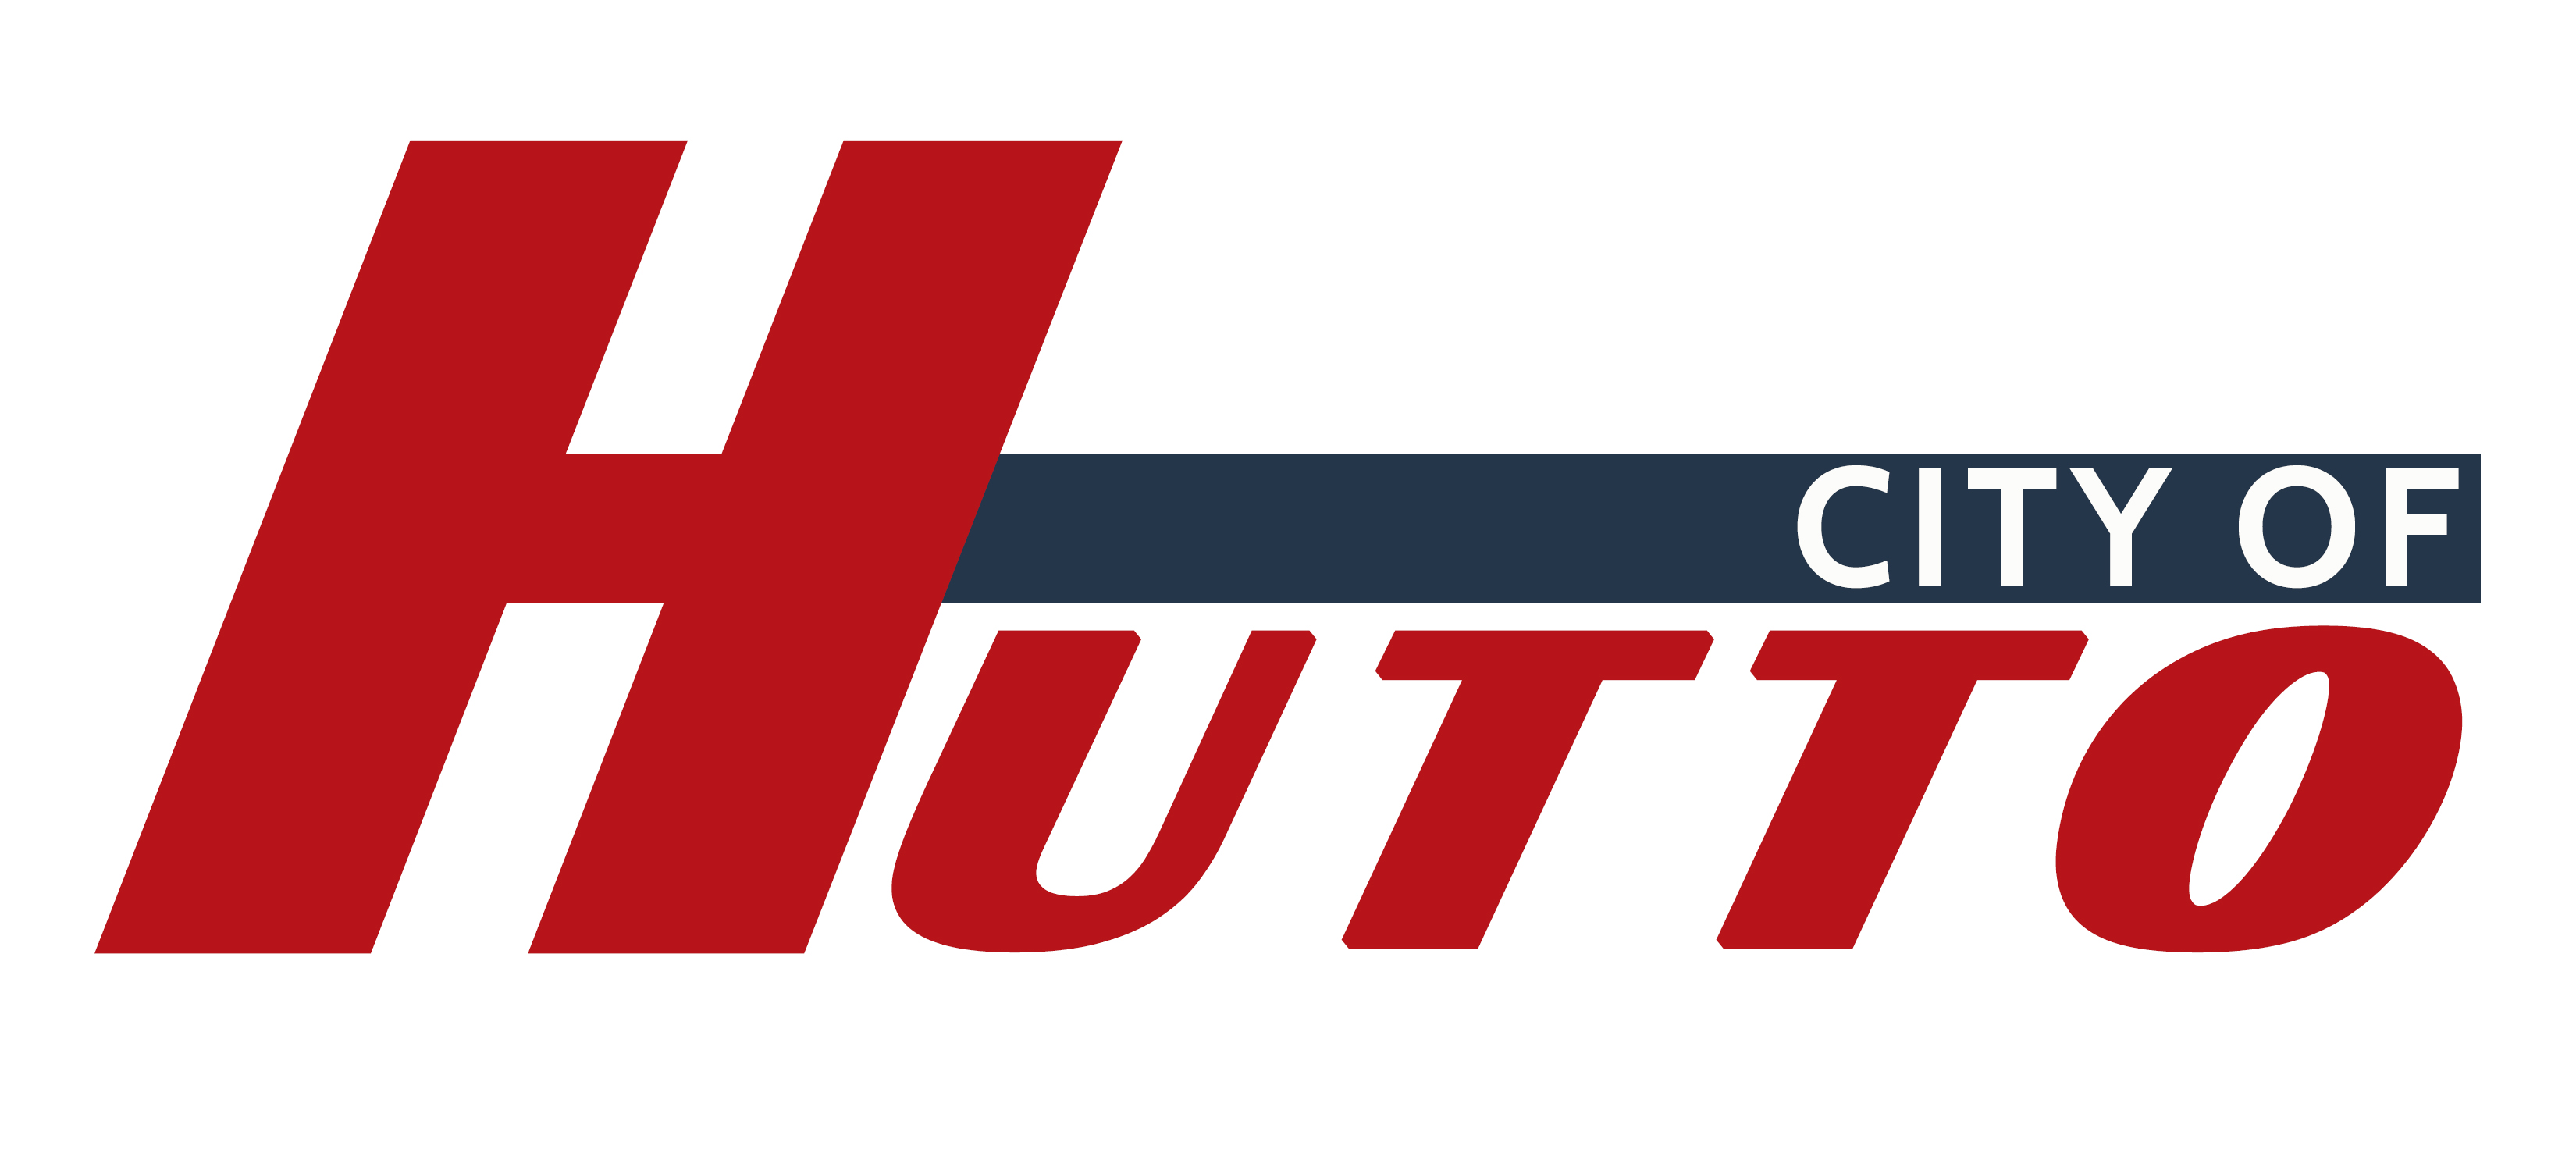 Organization logo of City of Hutto